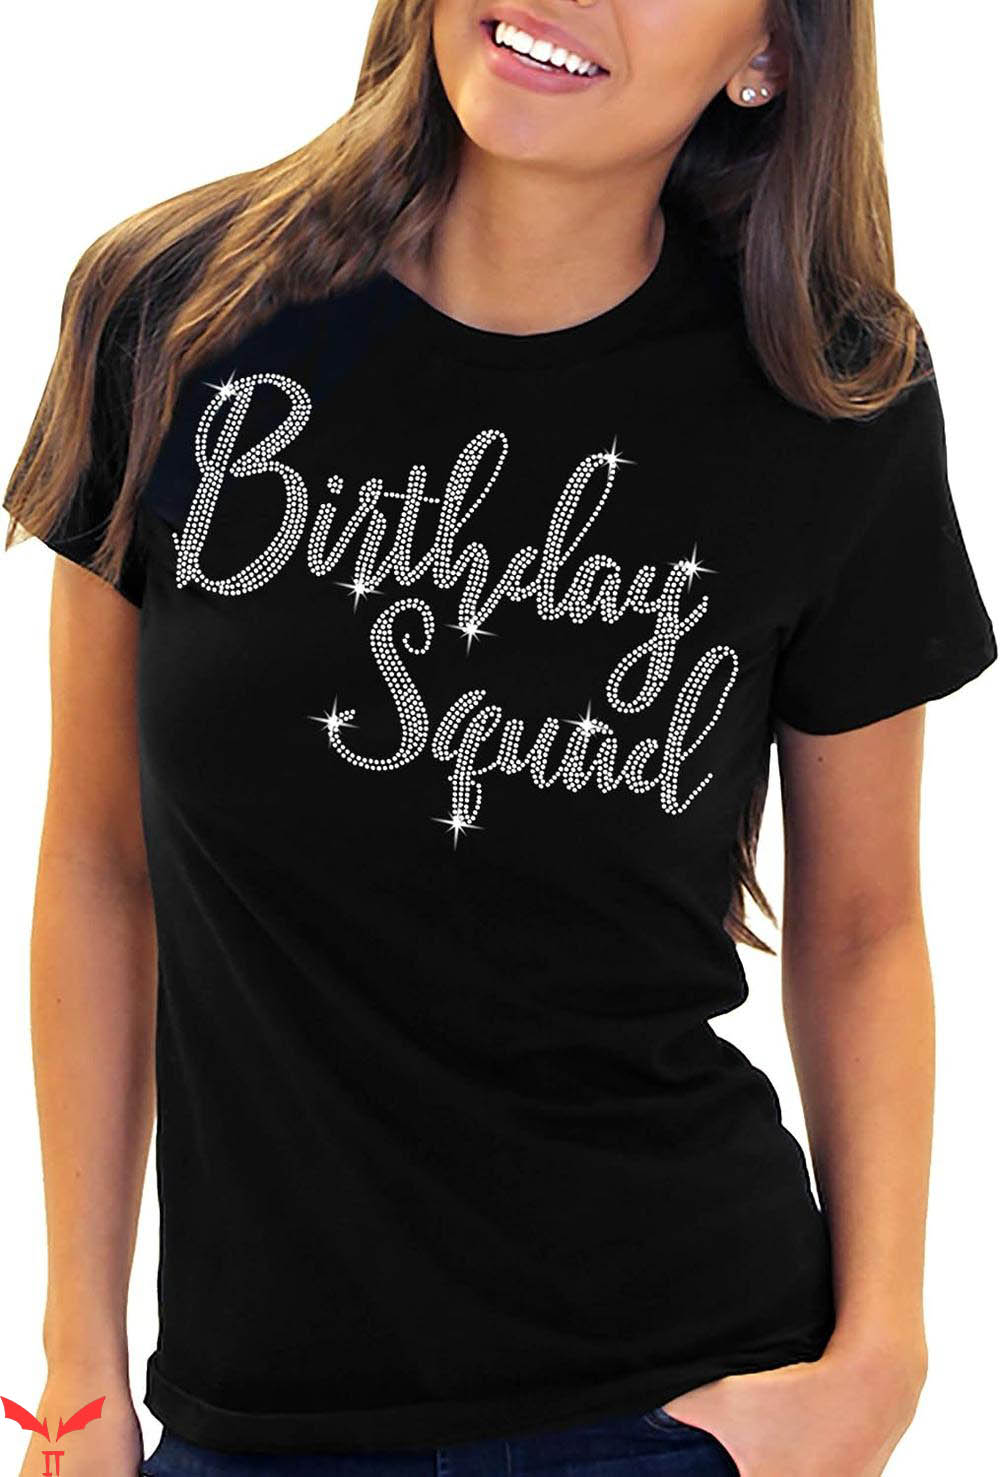 Birthday Queen T-Shirt Birthday